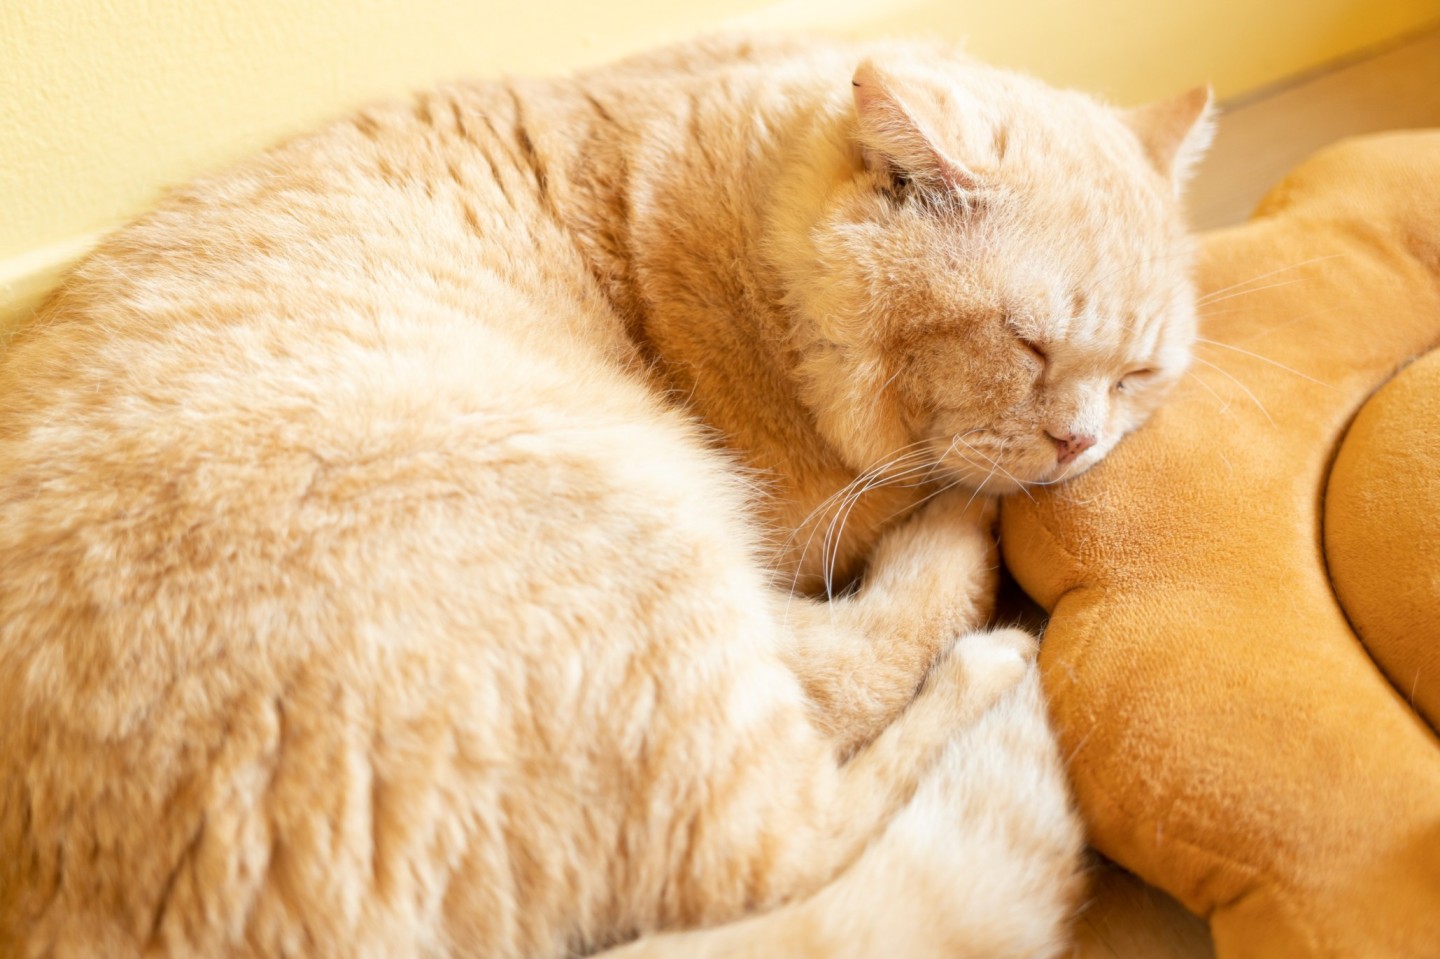 A cat sleeping on a yellow pillow